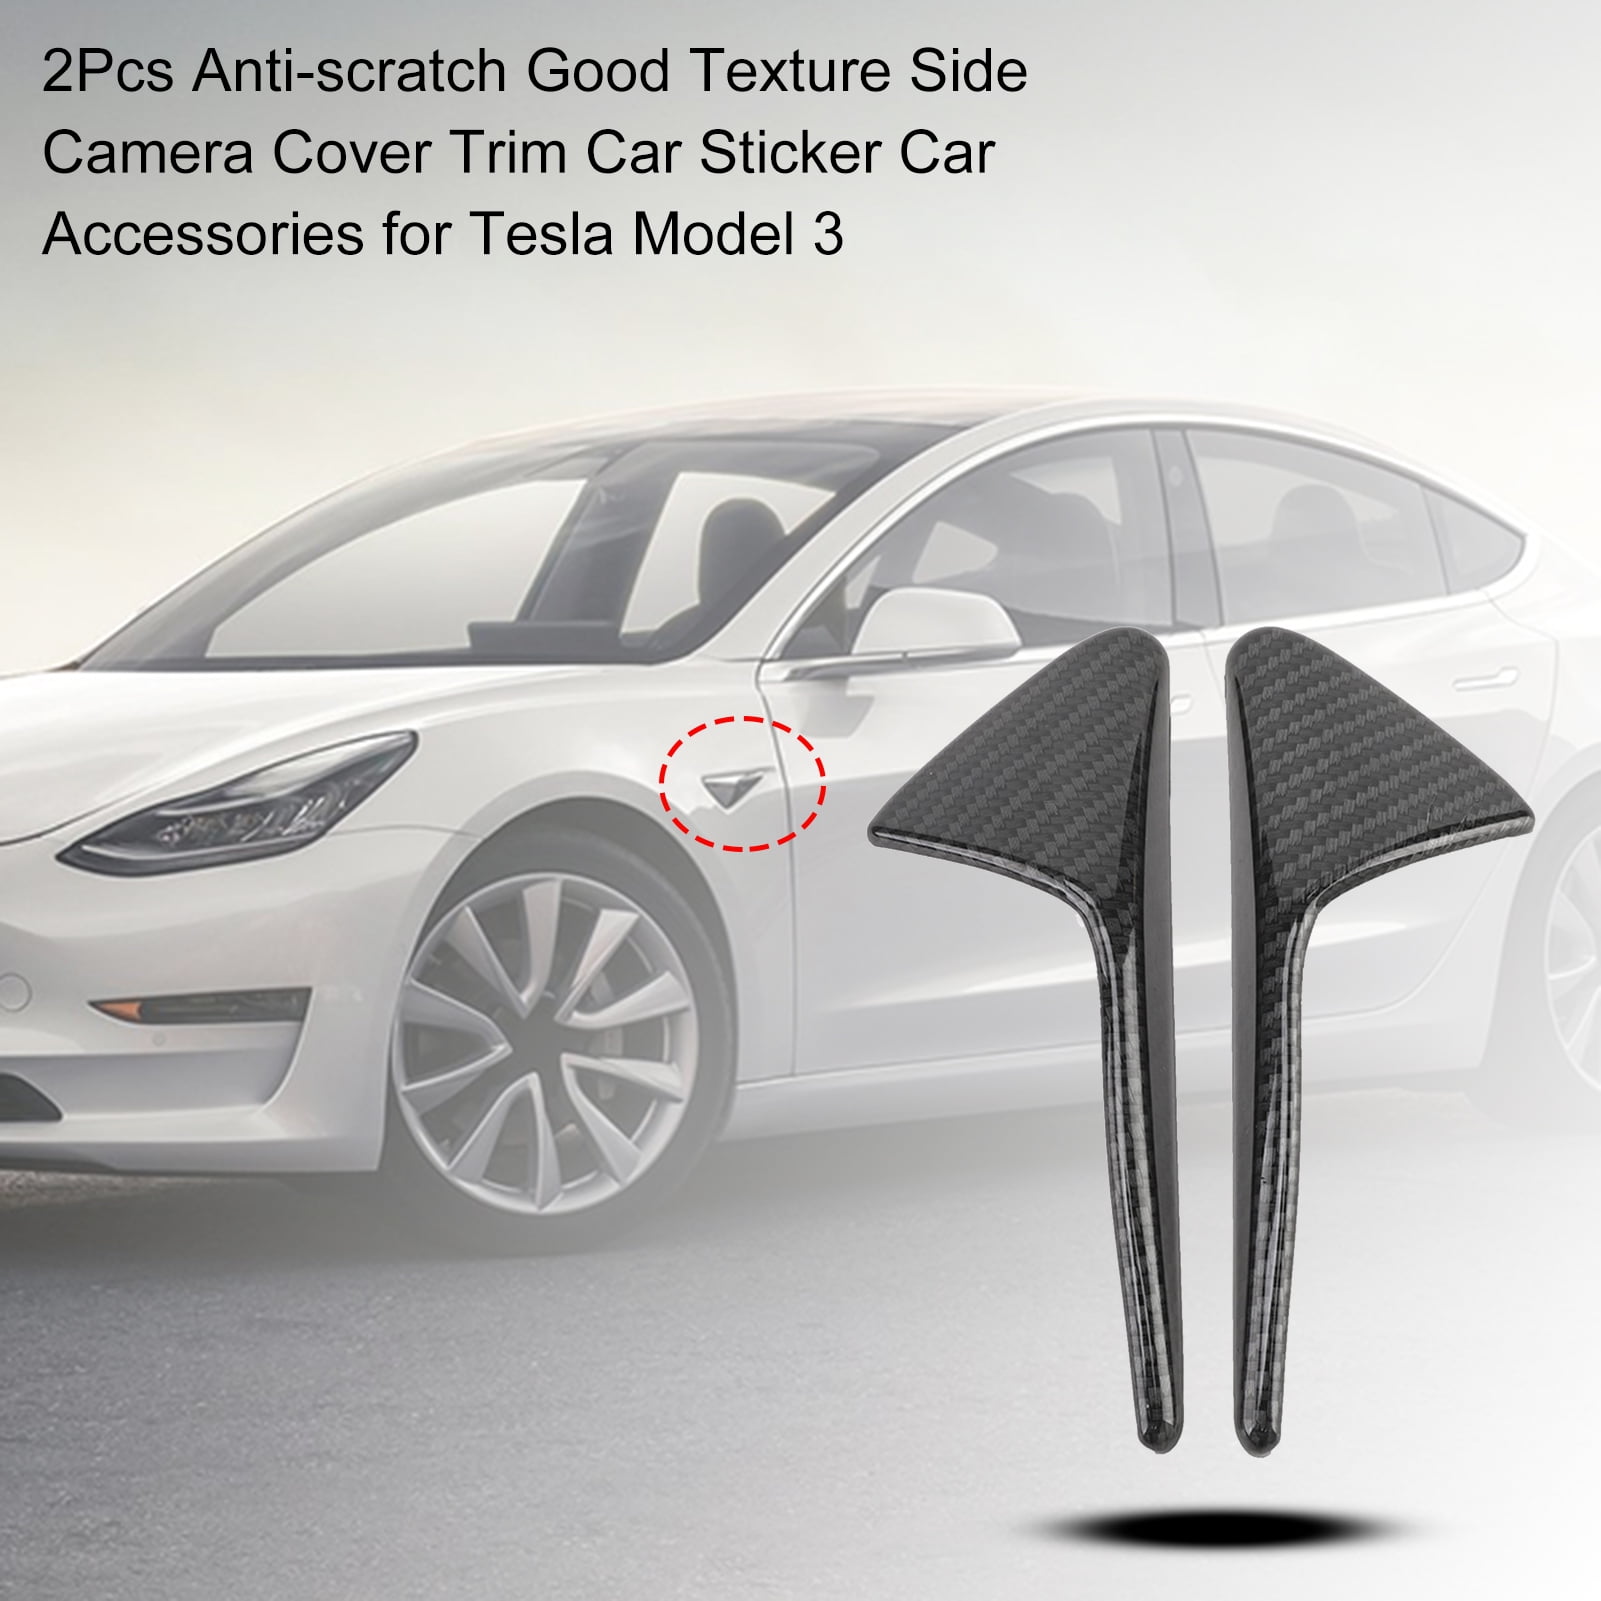 XWQ 2Pcs Anti-scratch Good Texture Side Camera Cover Trim Car Sticker Car  Accessories for Tesla Model 3 